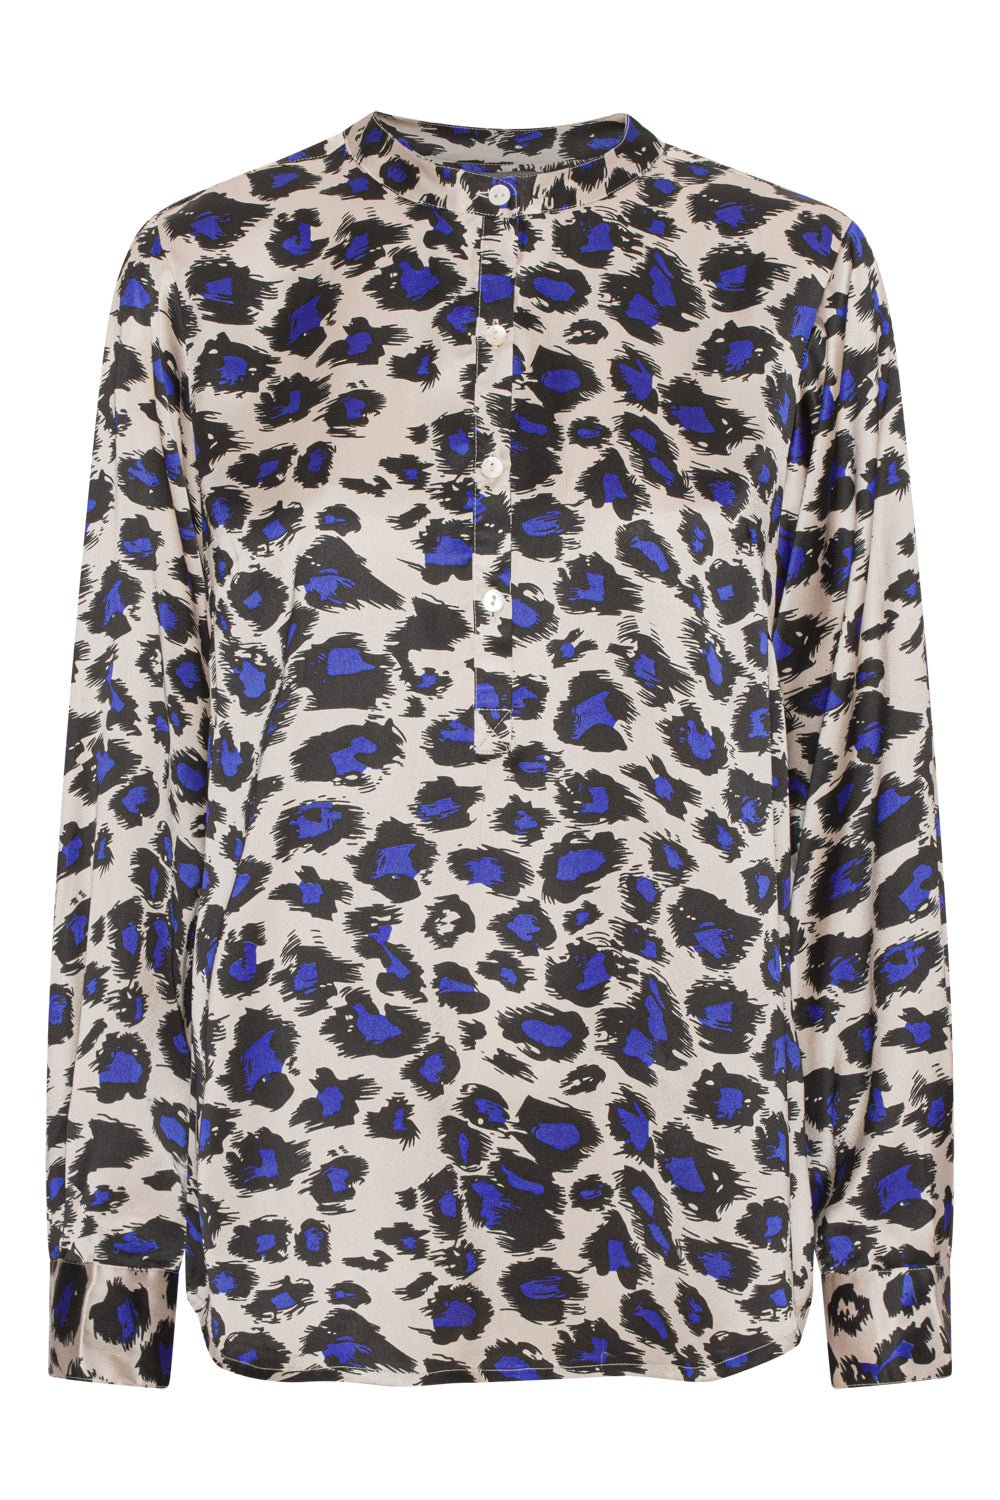 Bella Leopard - Kasturi Silk - Skjorte - Hvid/Blå - MALENE HOCKE